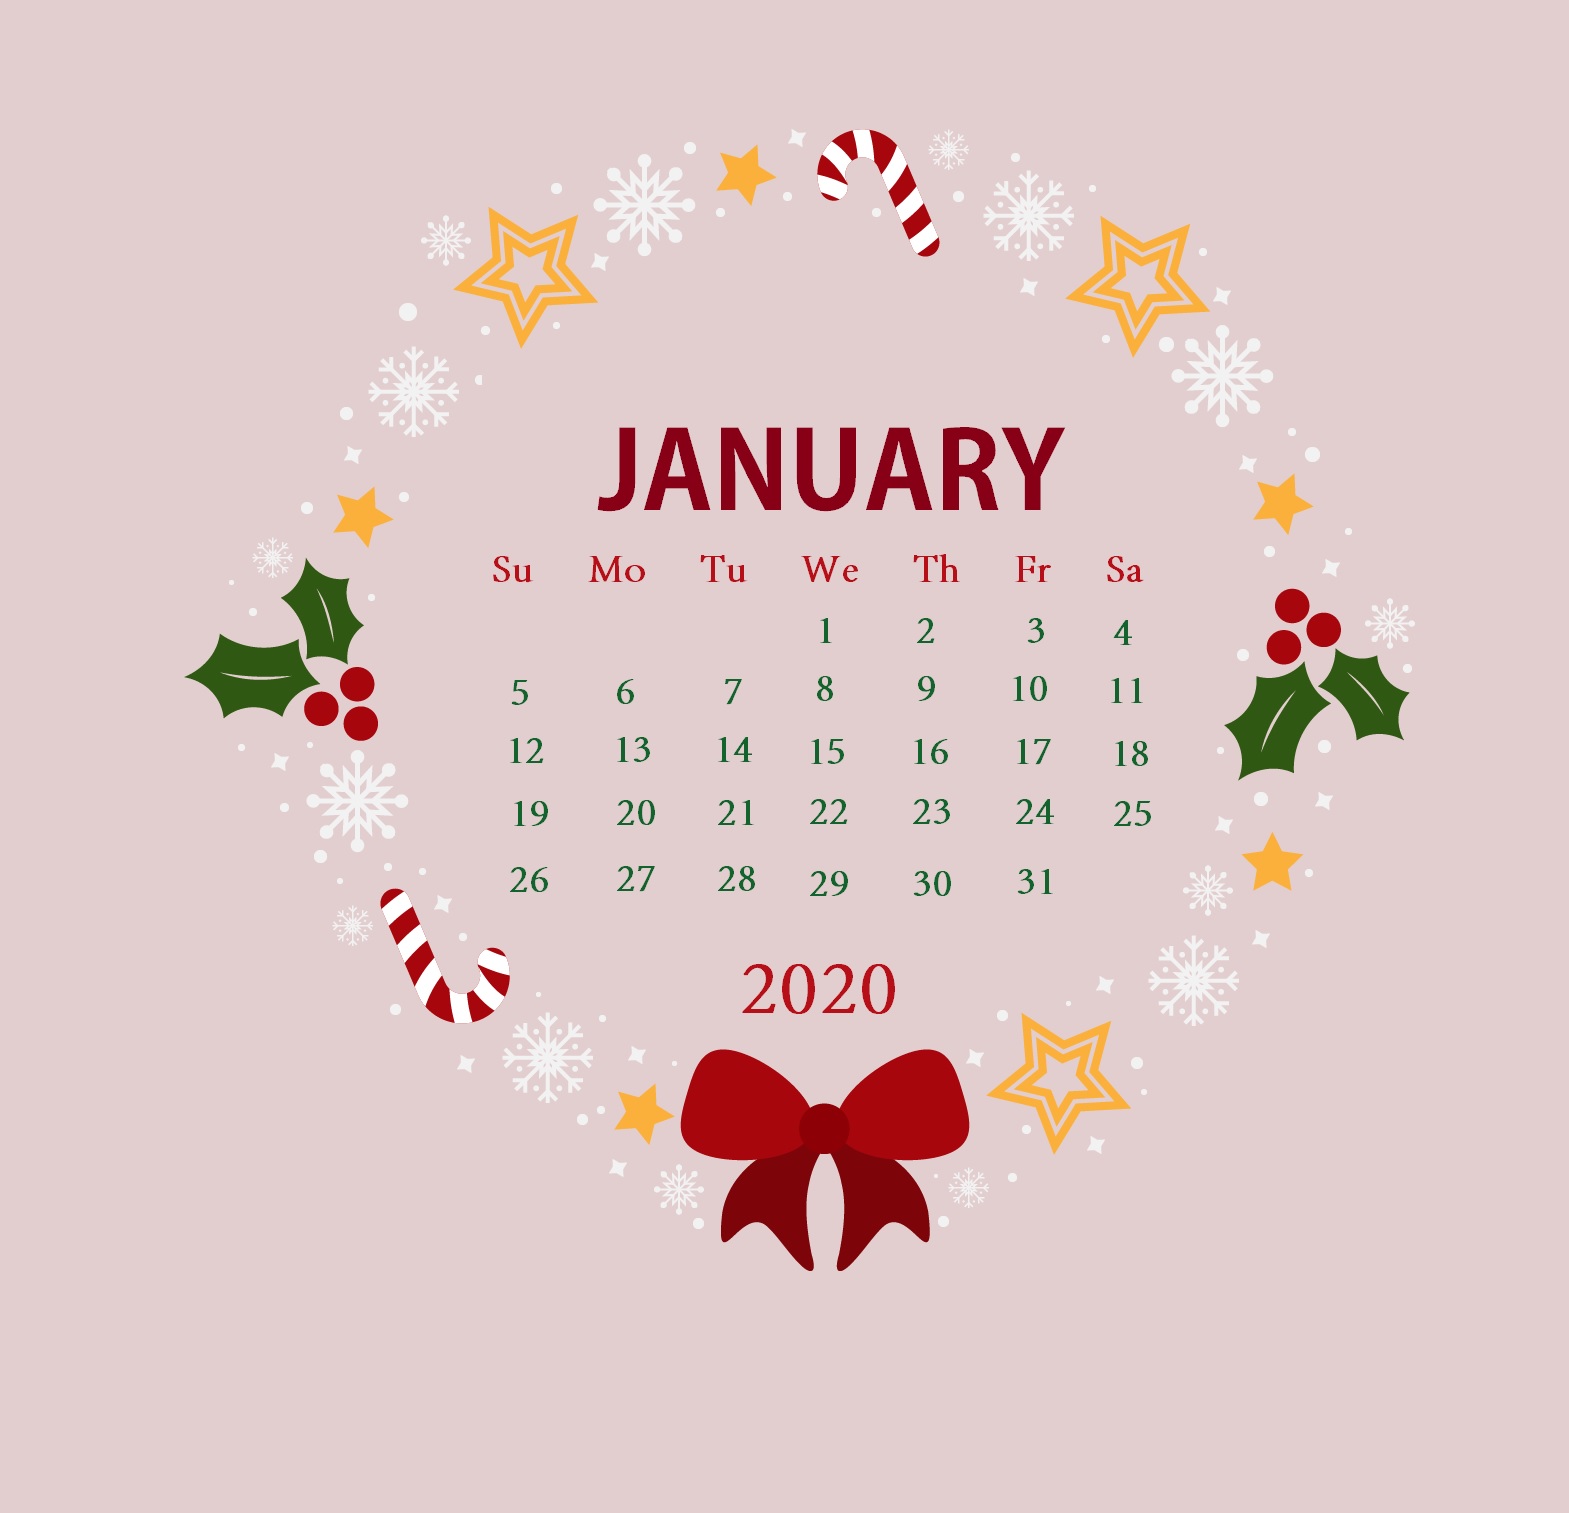 iPhone January 2020 Wallpaper Calendar Latest Calendar 1569x1513